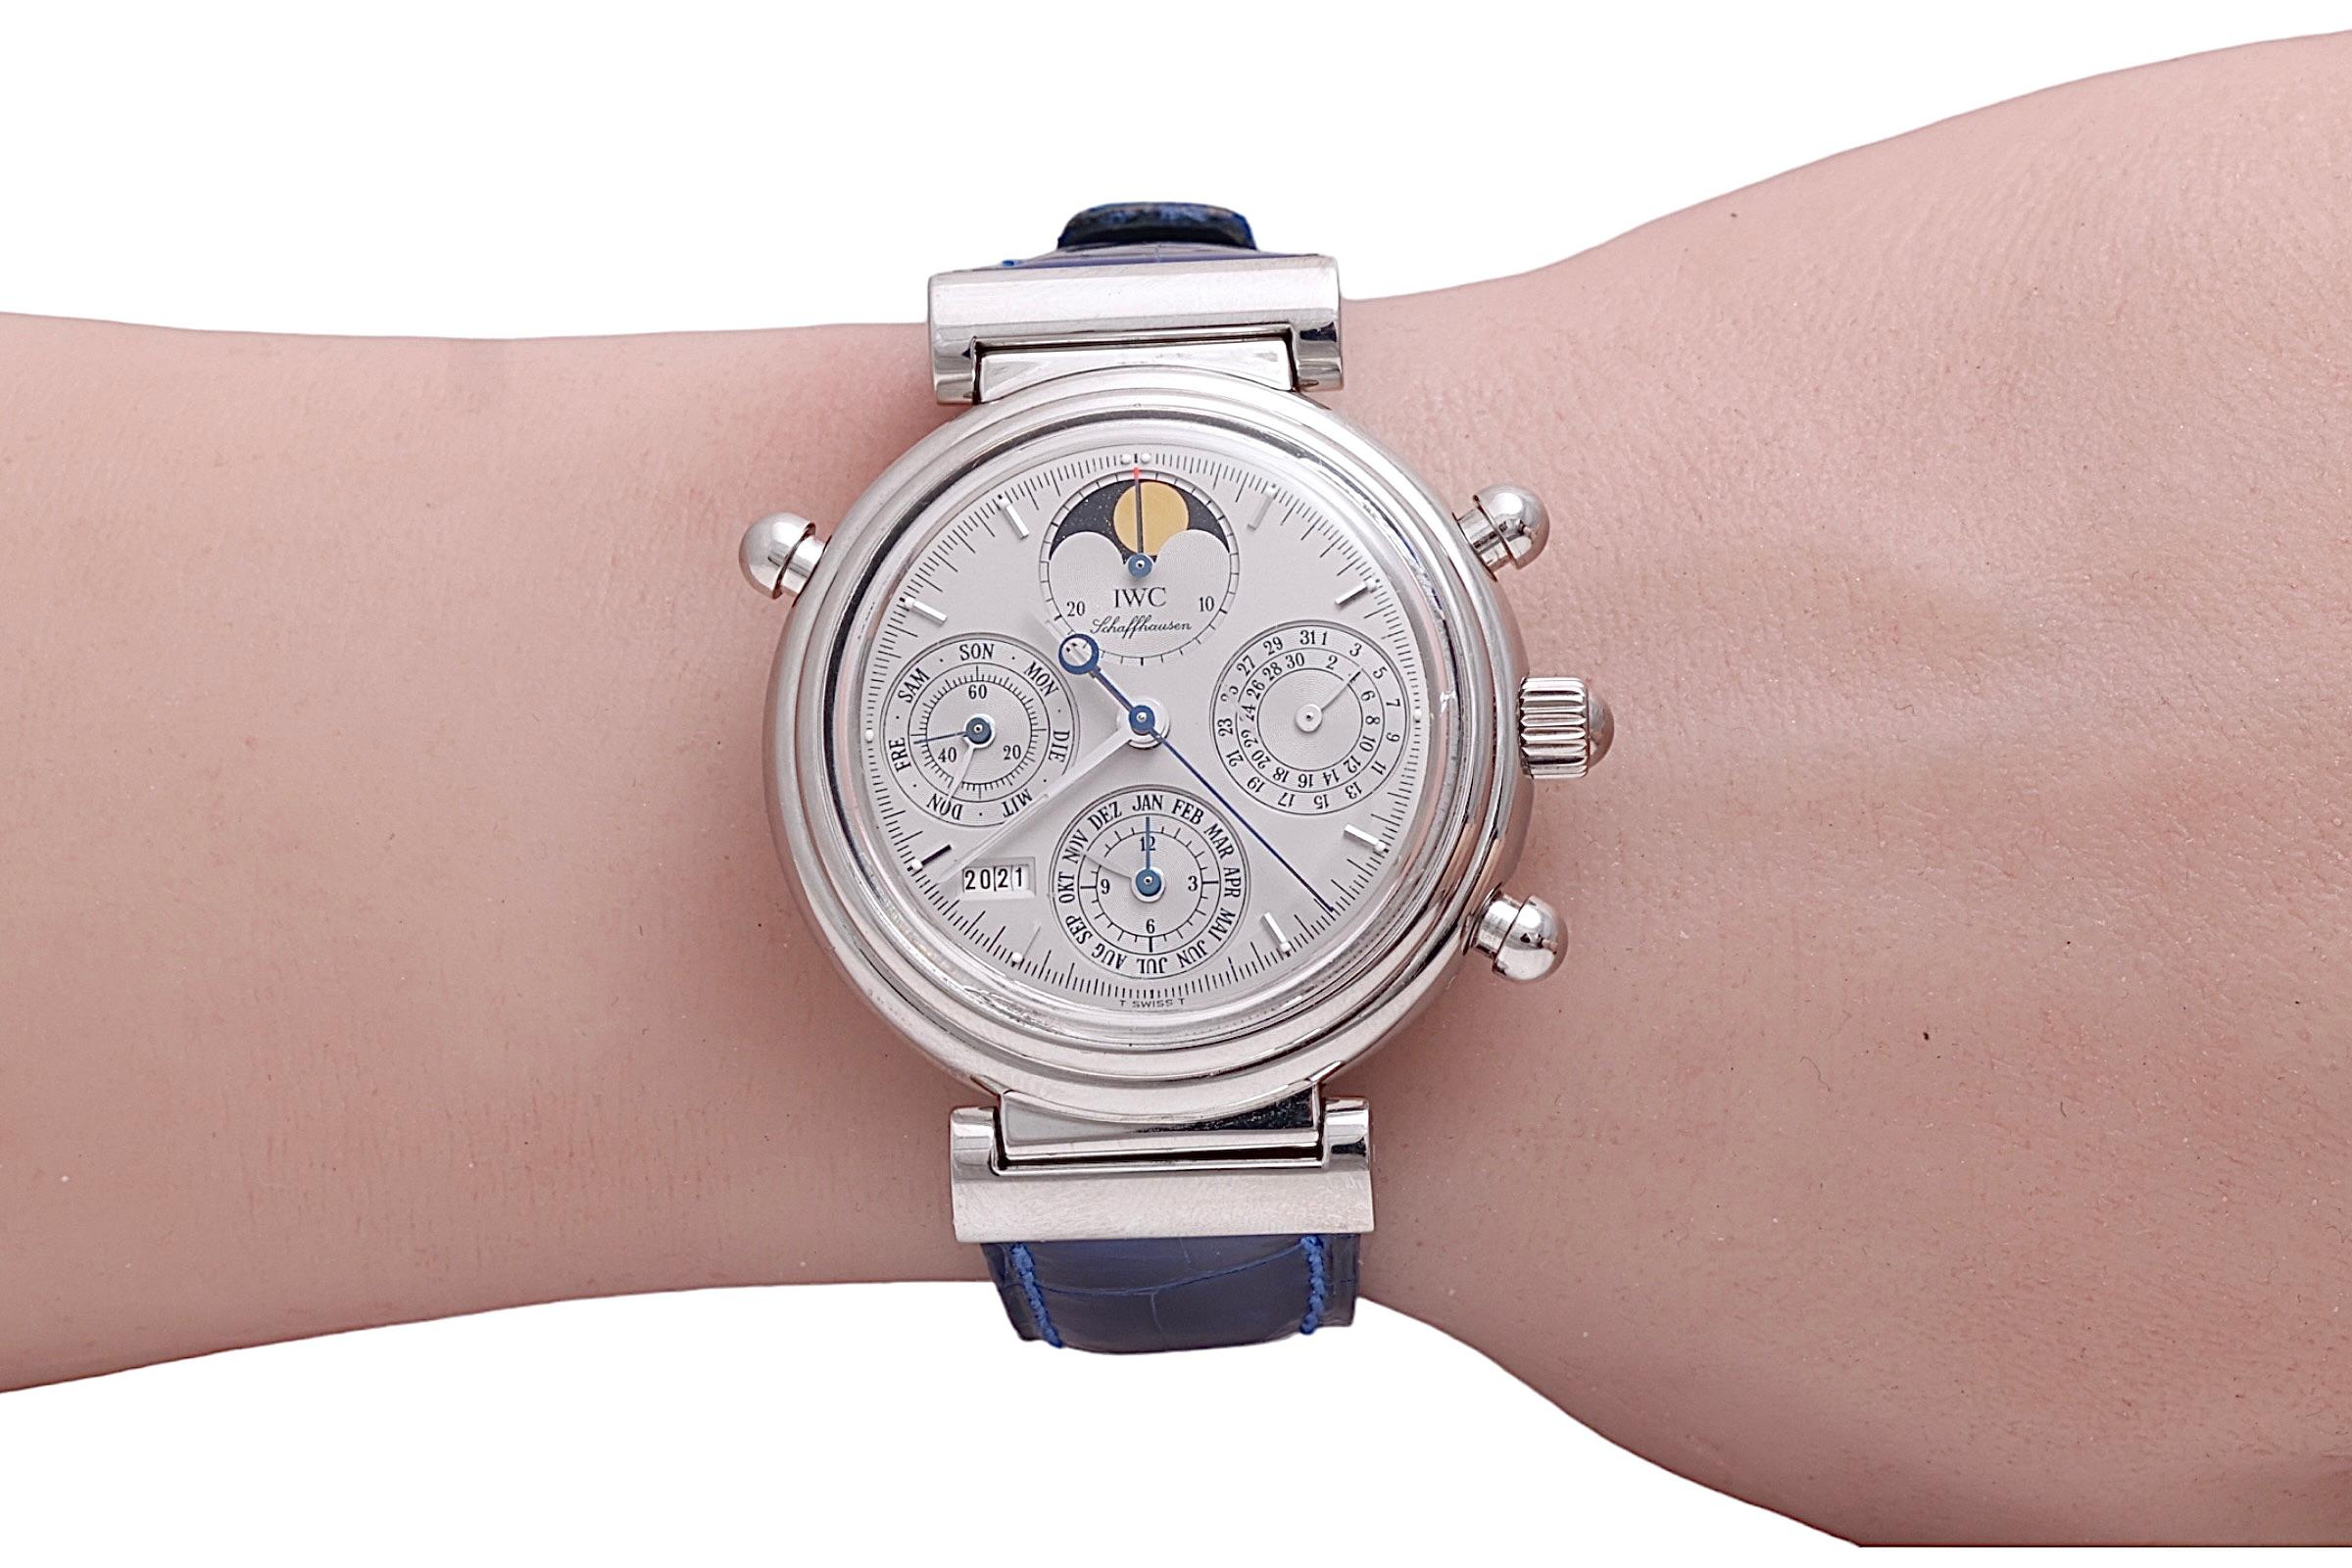 Platinum IWC Perpetual Calendar Split Second Chronograph Limited Wrist Watch3751 For Sale 10